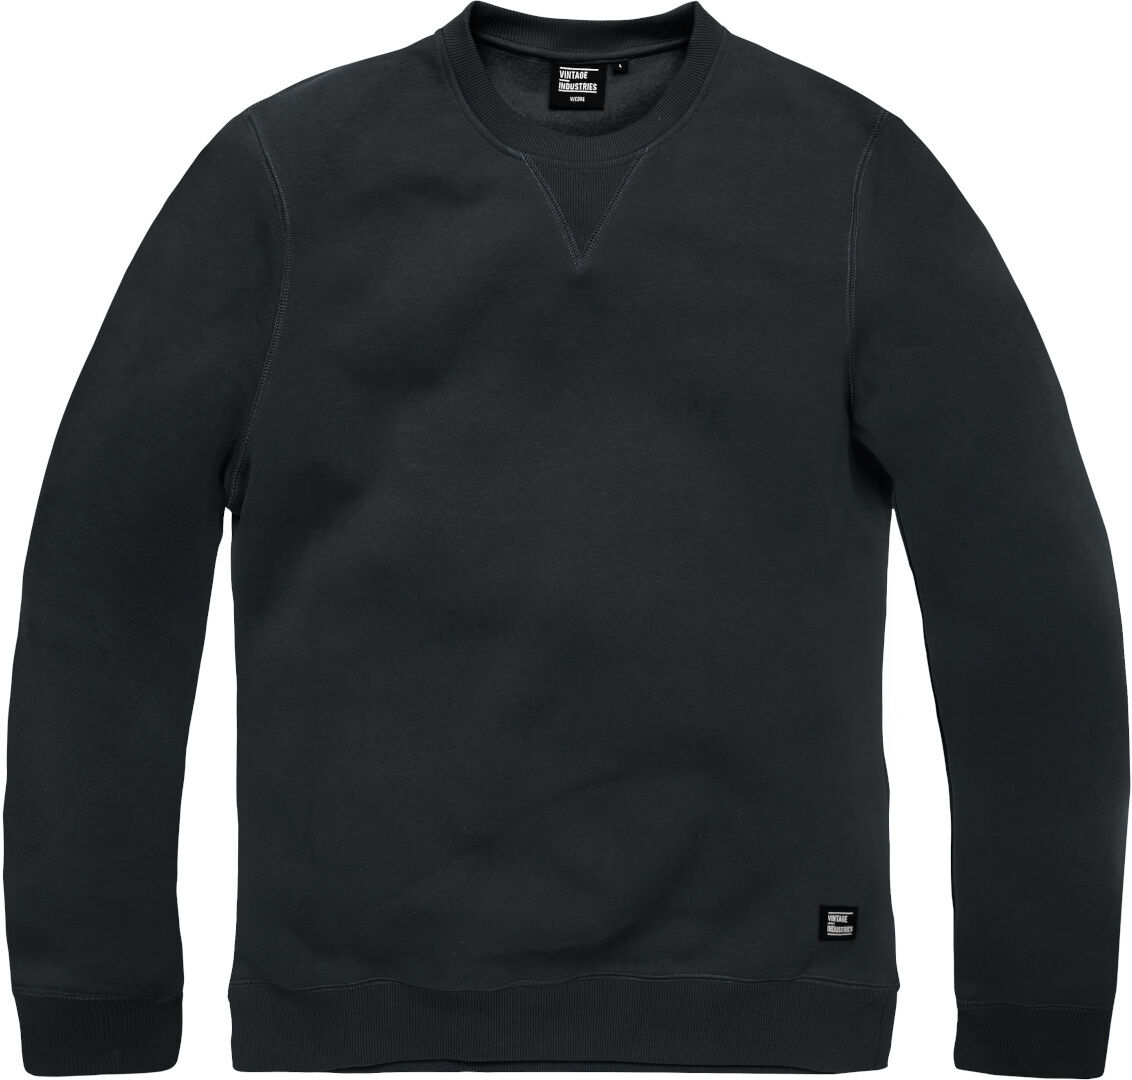 Vintage Industries Greeley Crewneck Sweatshirt XL Svart